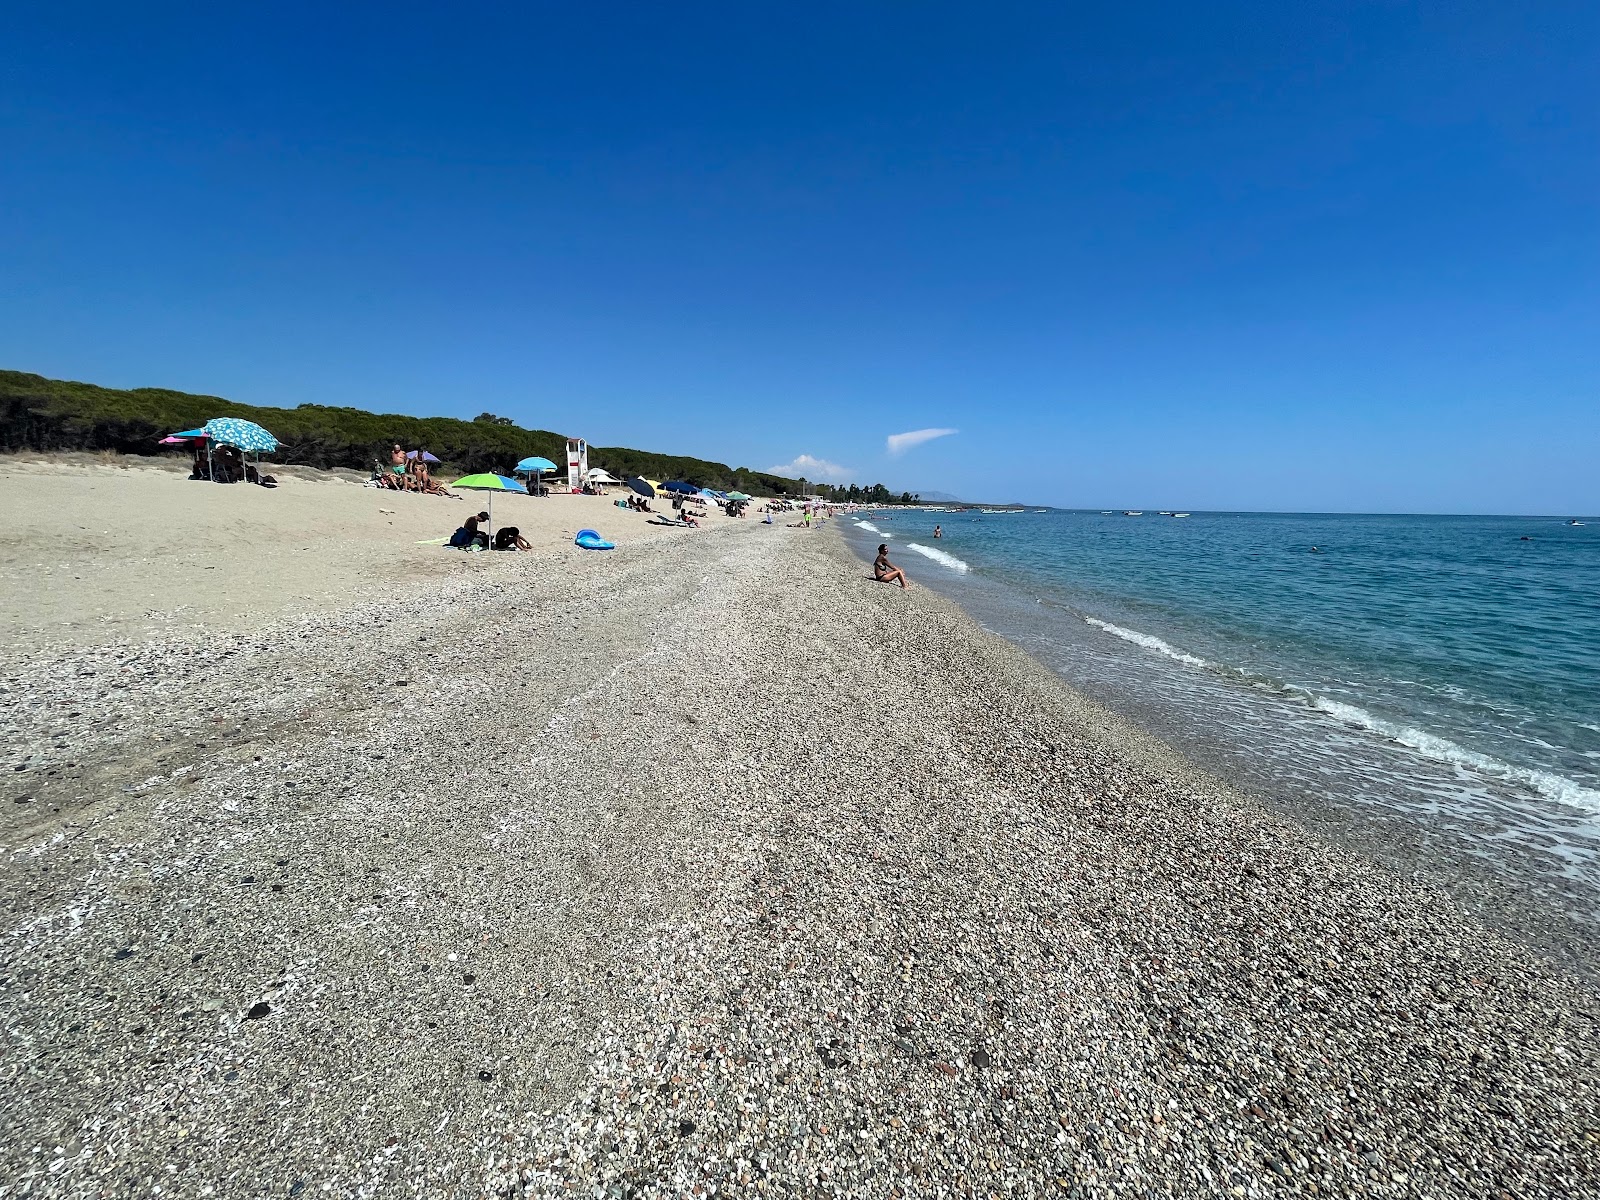 Spiaggia di Museddu'in fotoğrafı mavi saf su yüzey ile